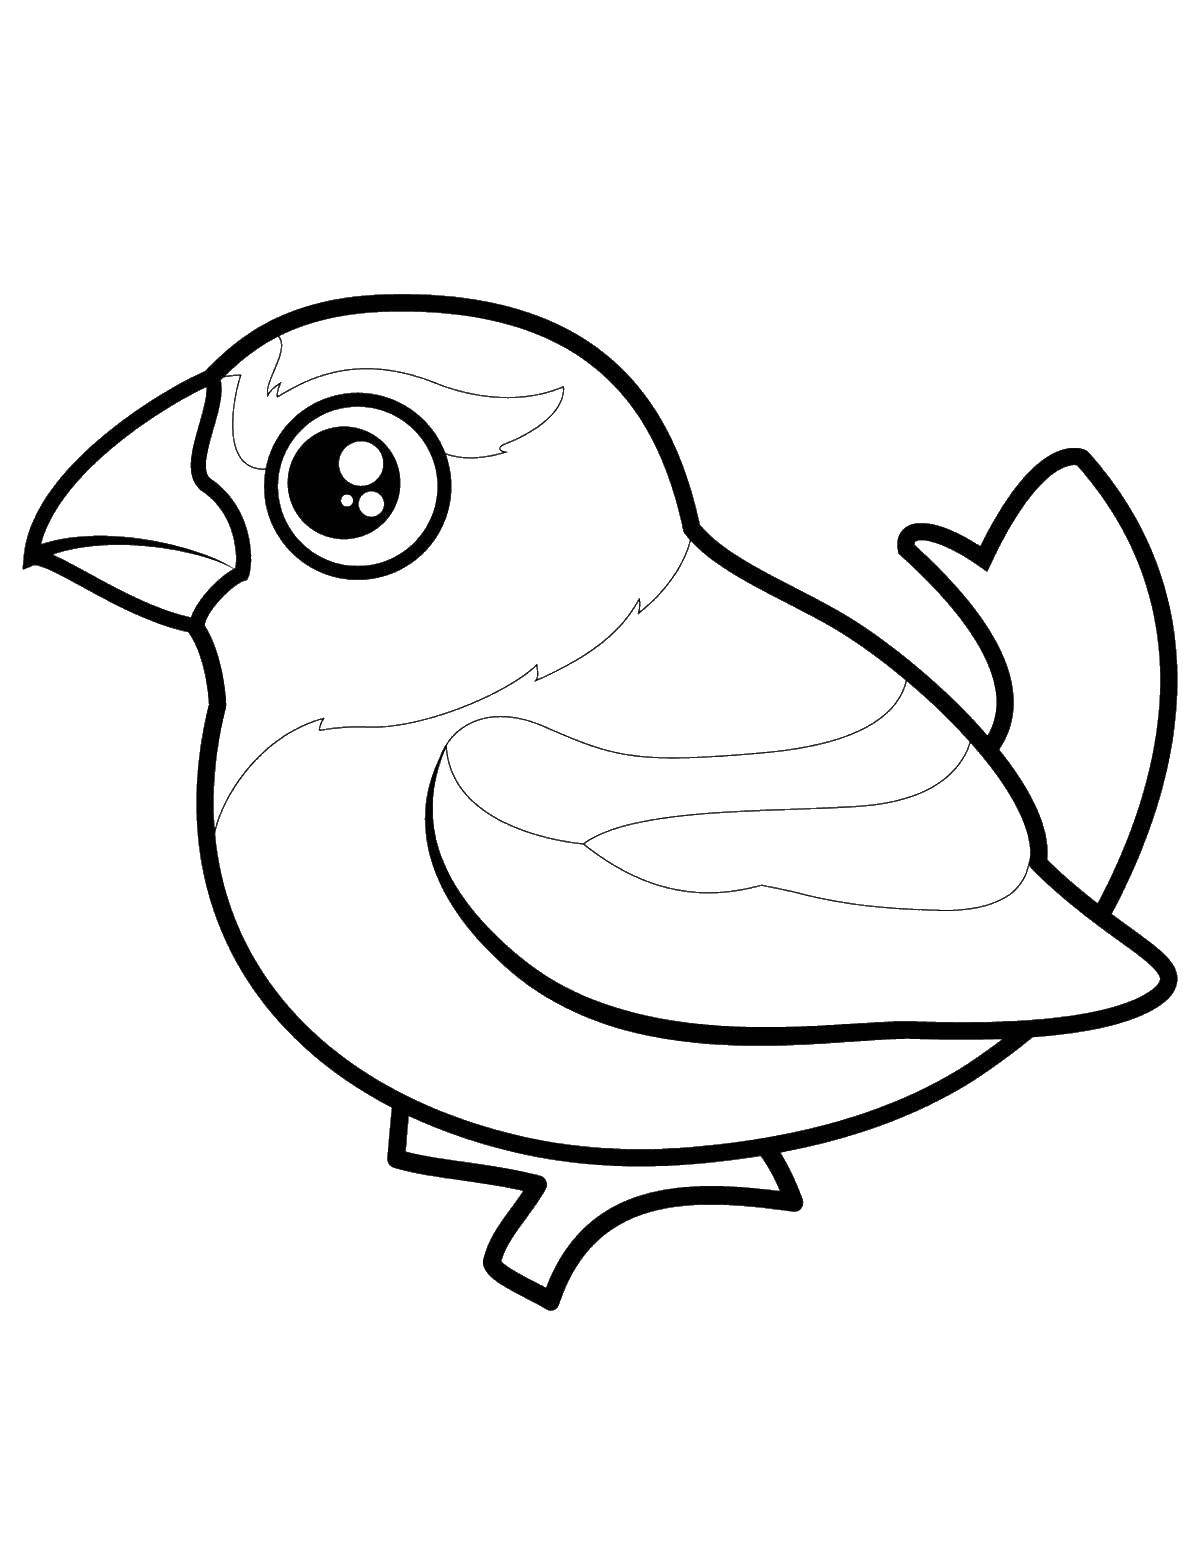 Coloring Bird with big eyes. Category birds. Tags:  birds, bird.